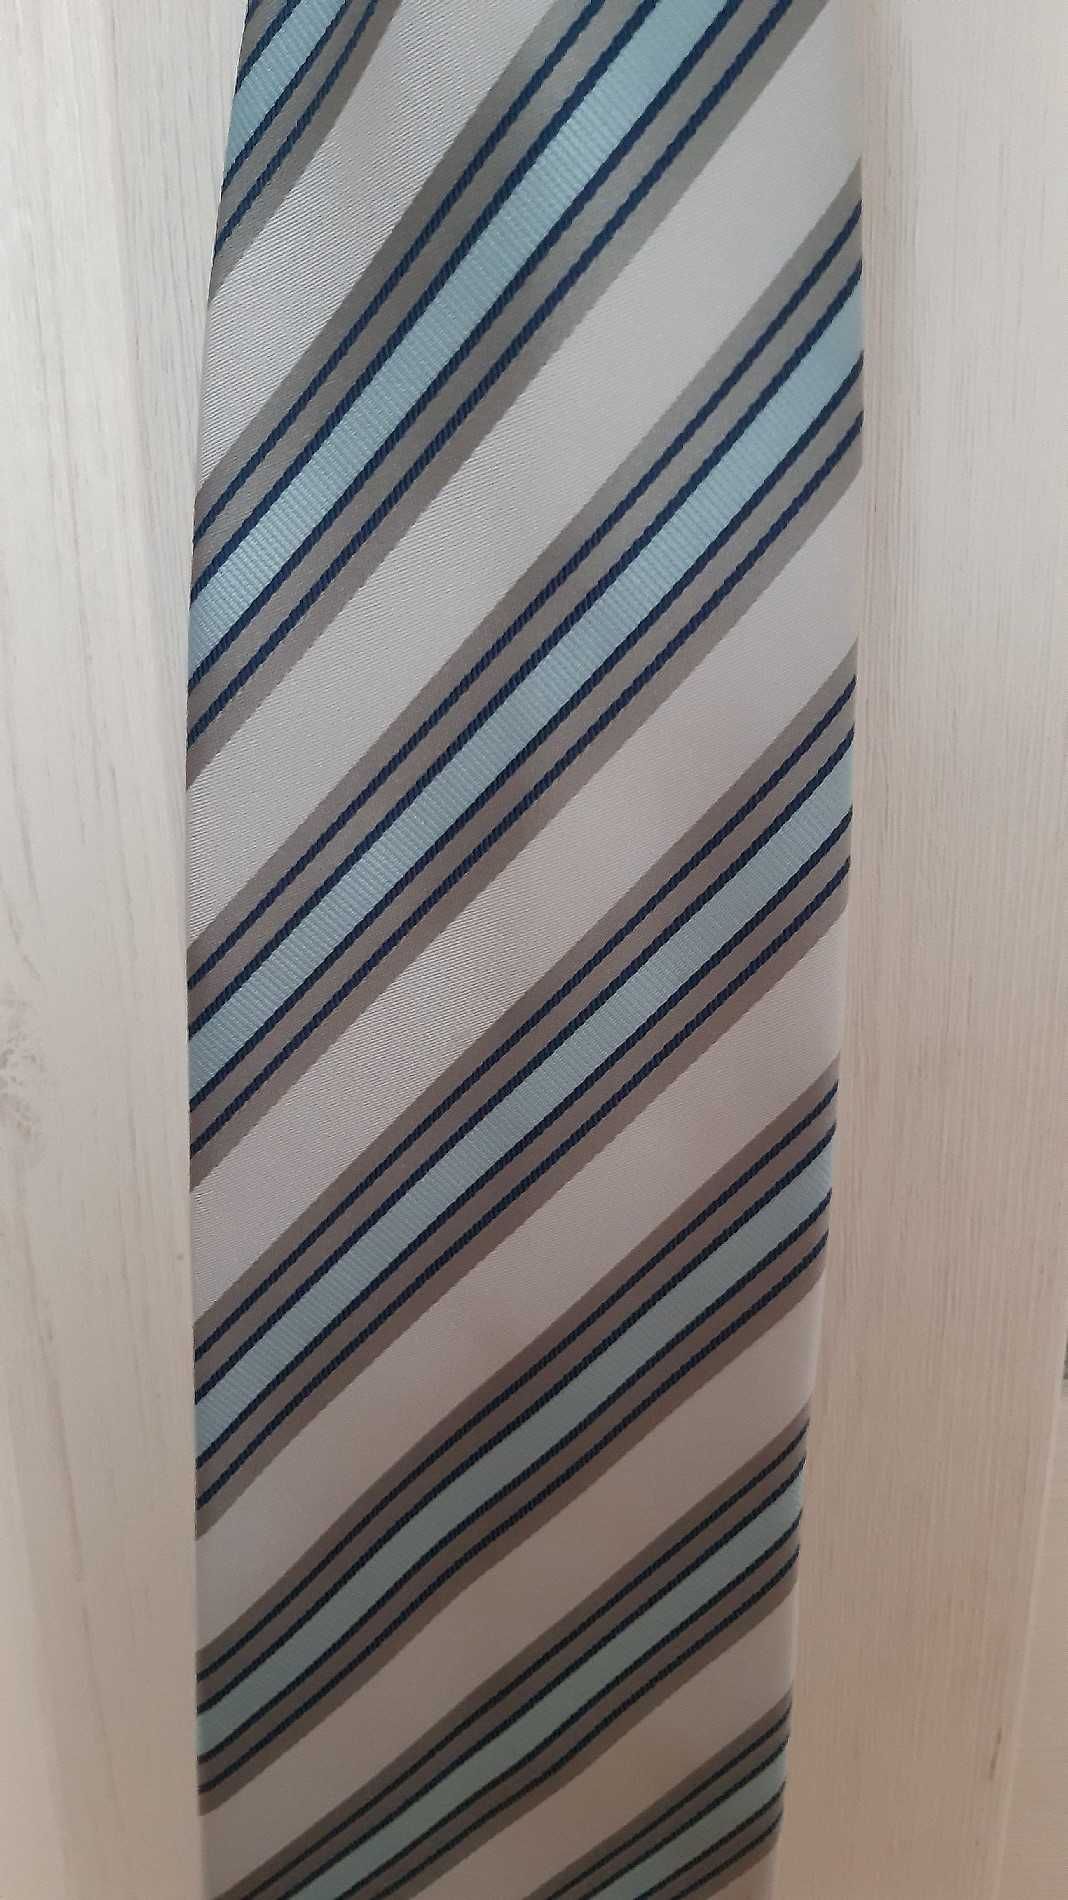 Krawat jasnoniebieski